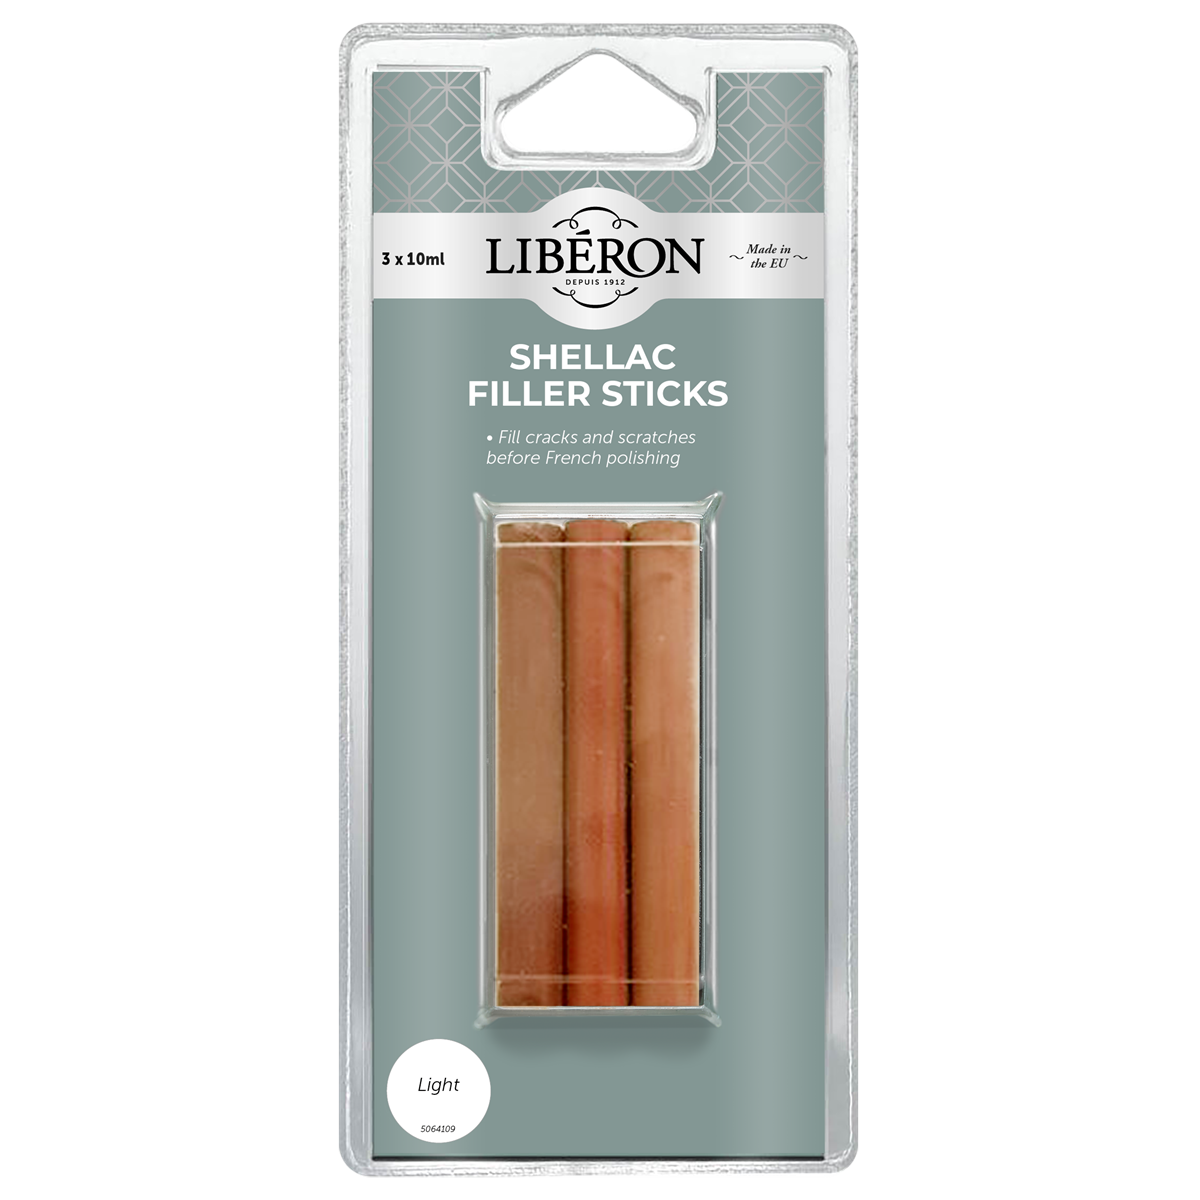 Liberon Shellac Filler Sticks Light Pack of 3